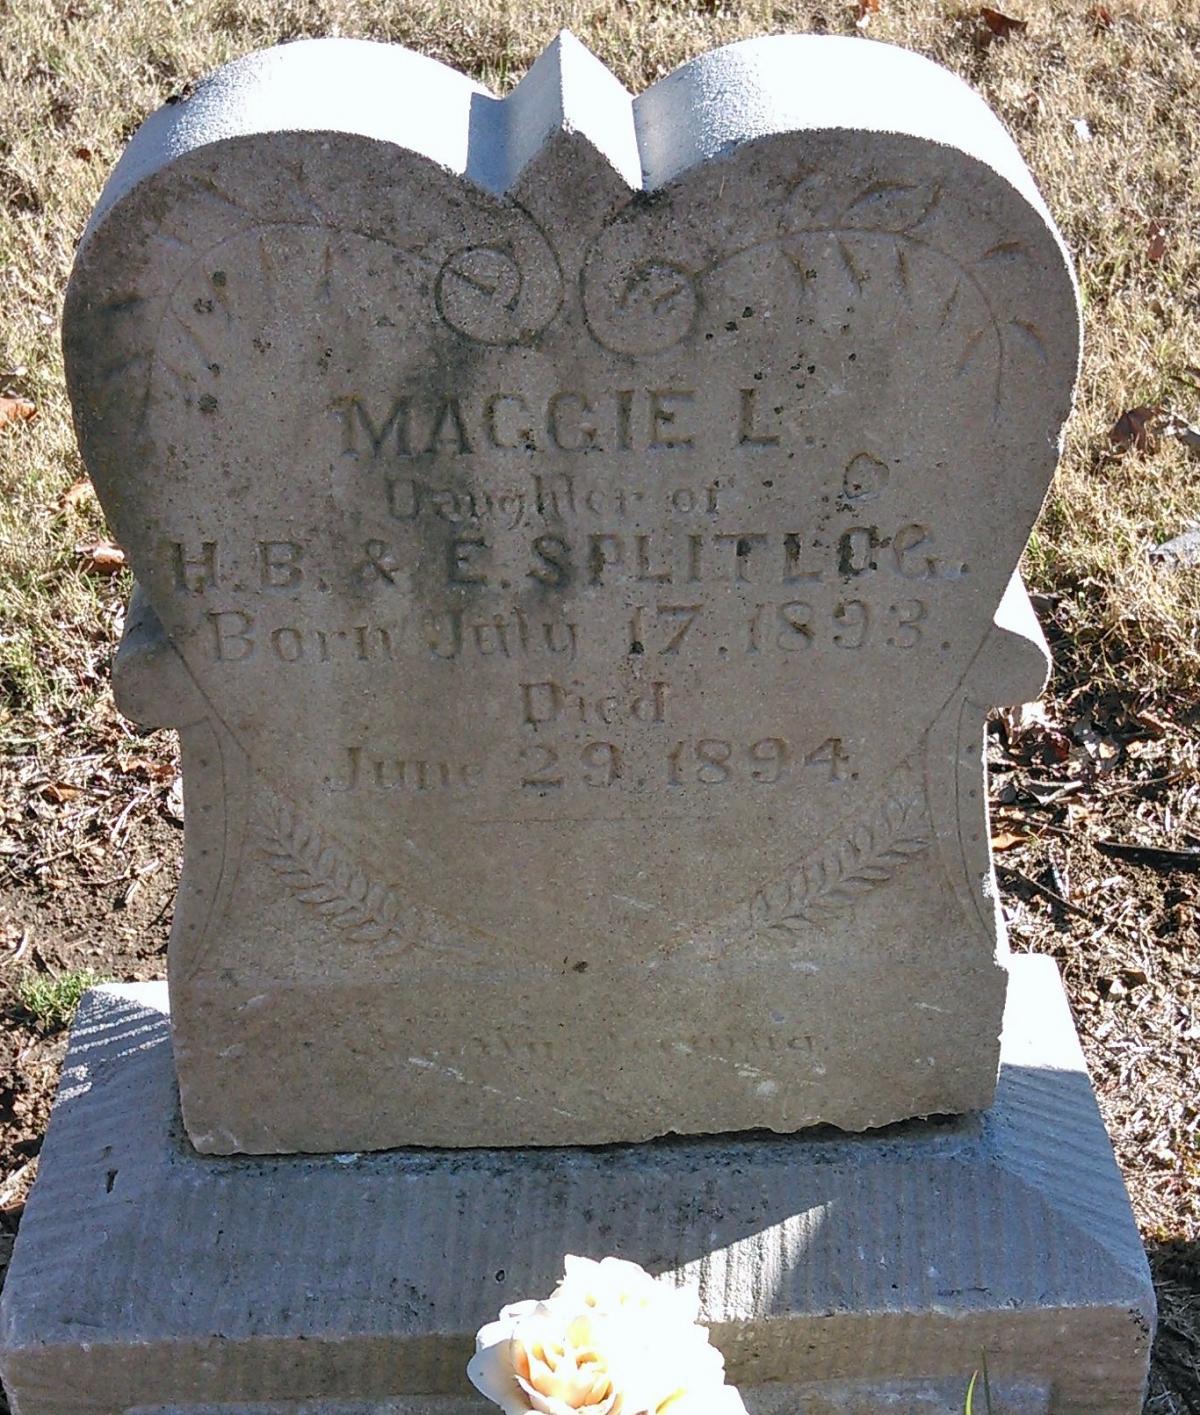 OK, Grove, Buzzard Cemetery, Splitlog, Maggie L. Headstone